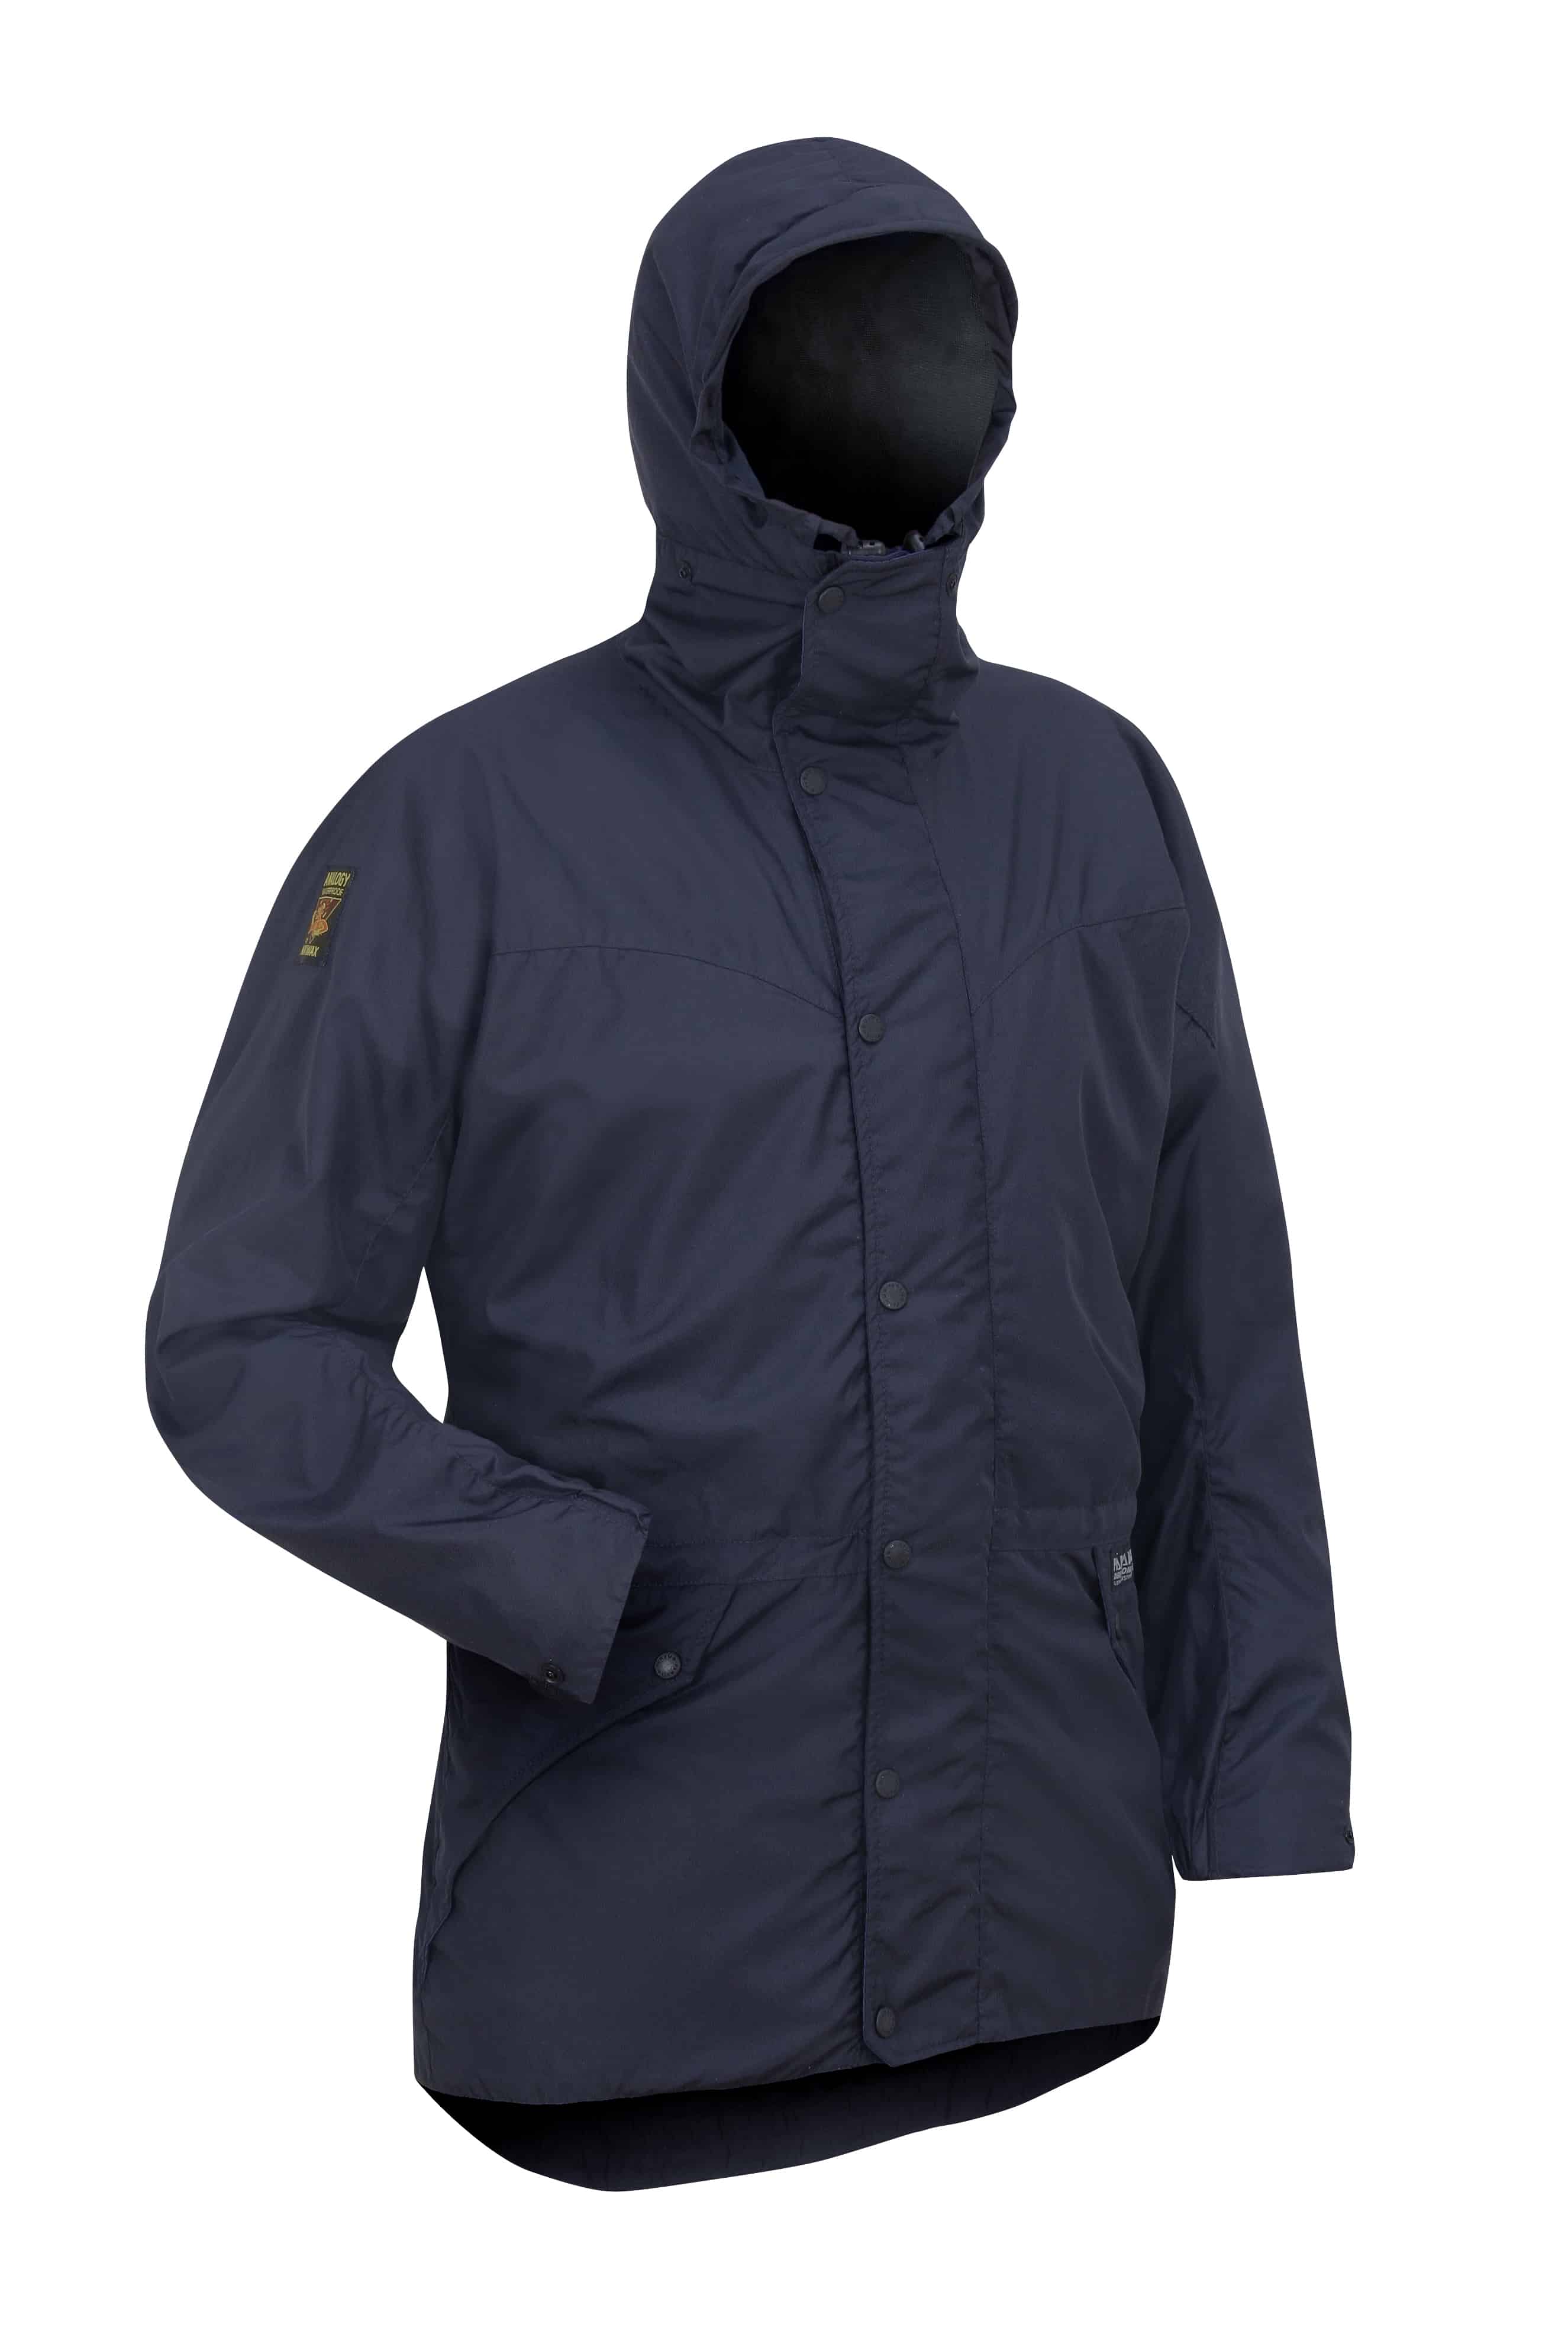 Paramo Men's Cascada Jacket Midnight | Waterproof | Free UK Delivery